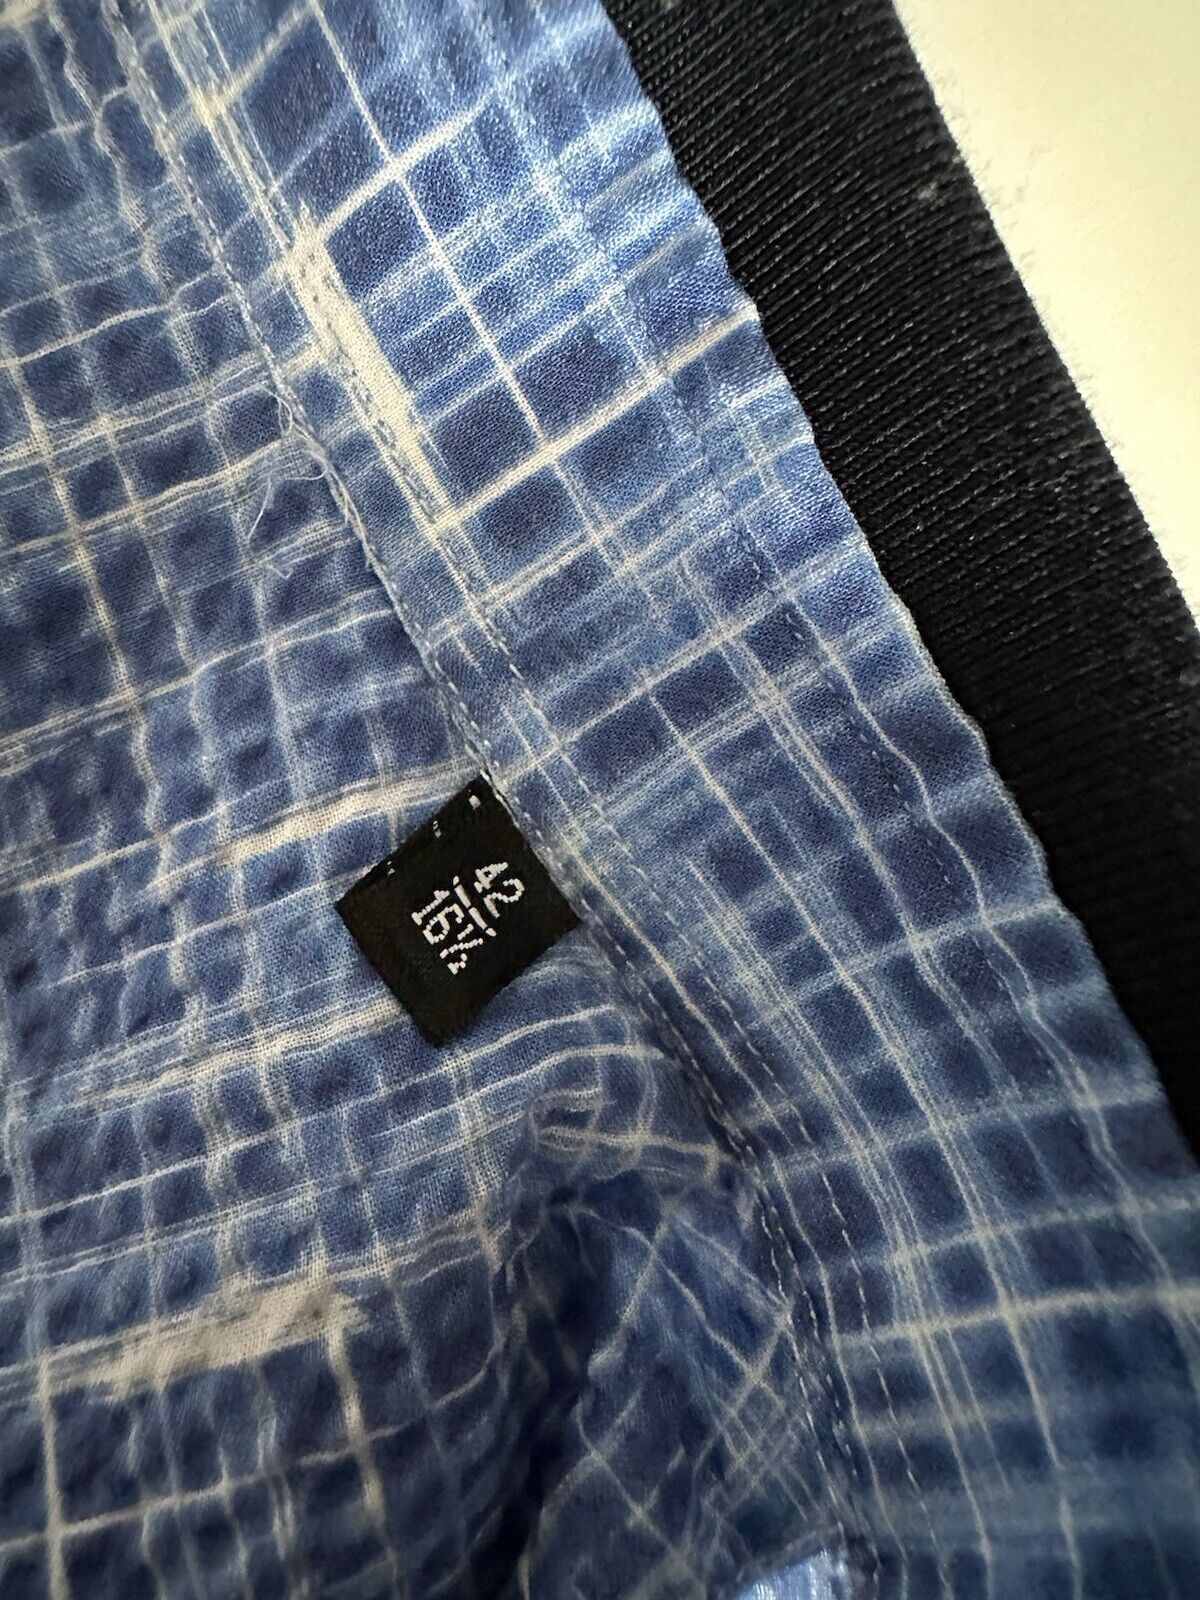 Giorgio Armani Men's Cotton Dress Shirt 42/16.5  Made in Italy